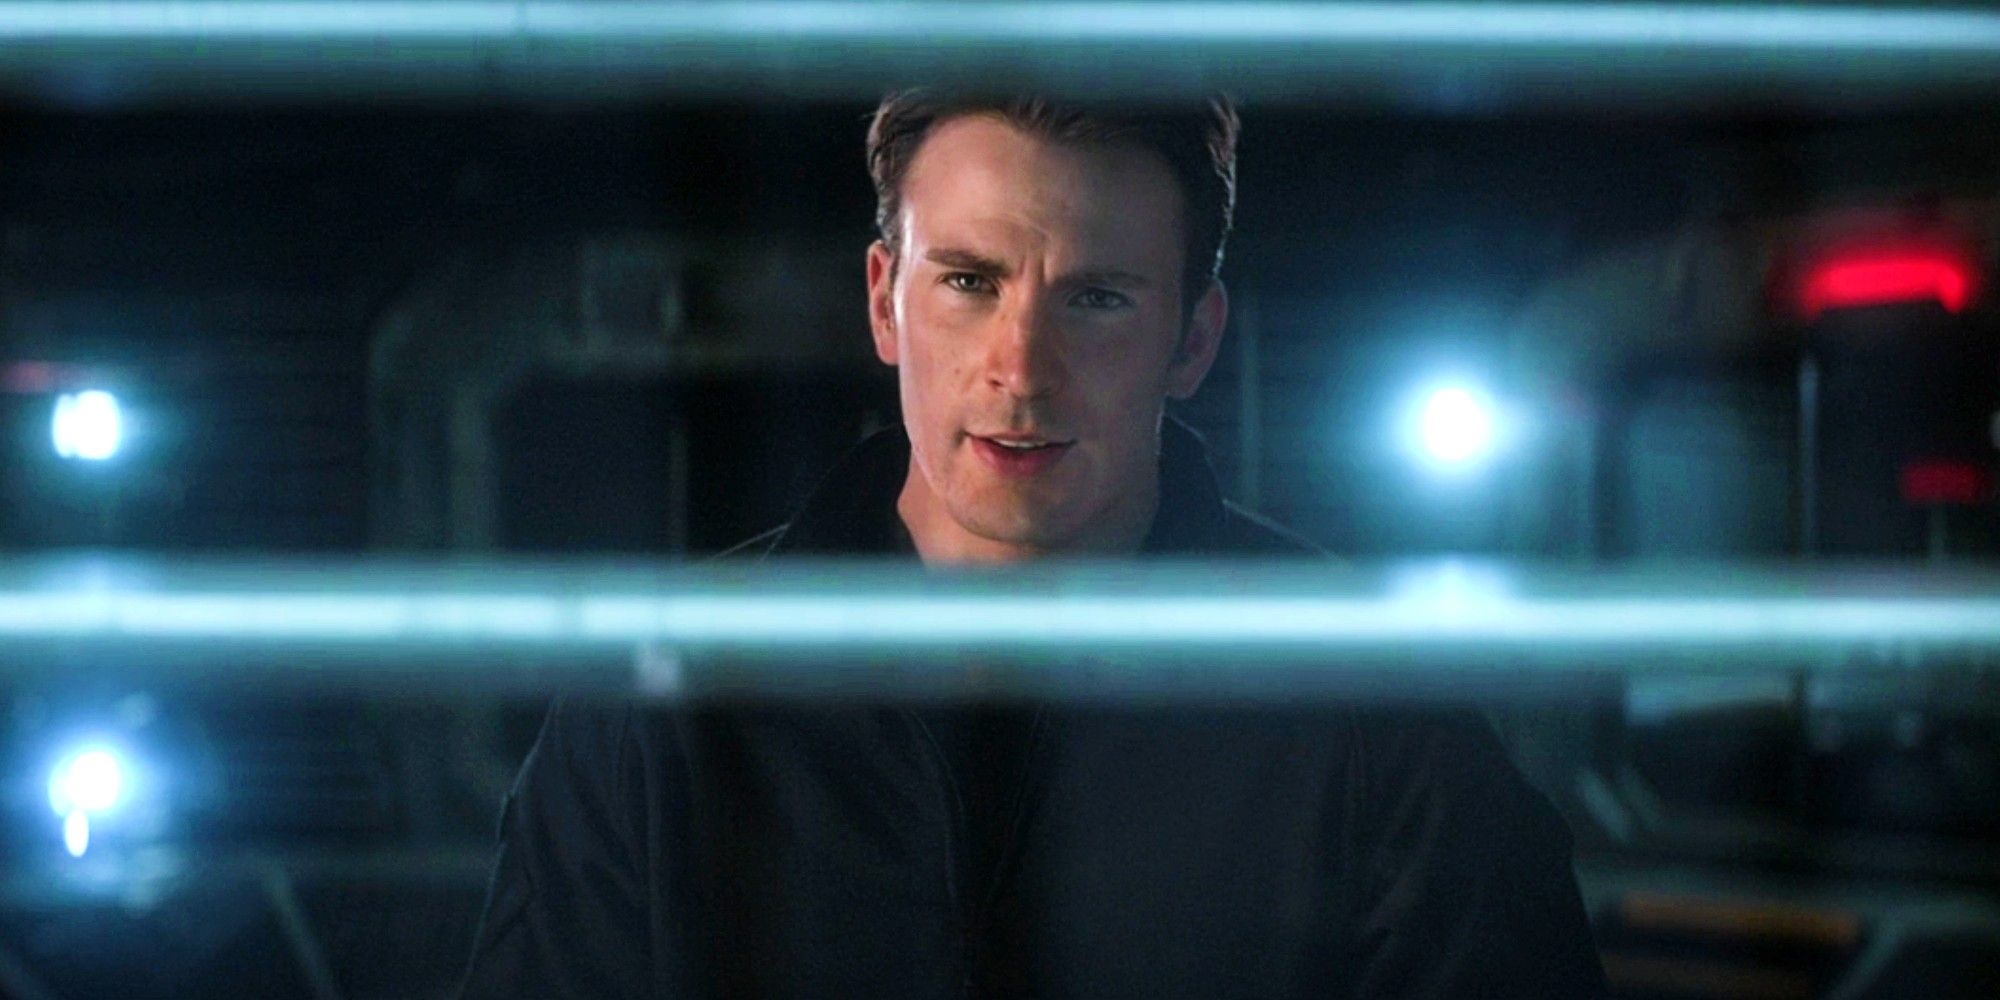 Steve Rogers breaks the Avengers out of prison in Captain America: Civil War